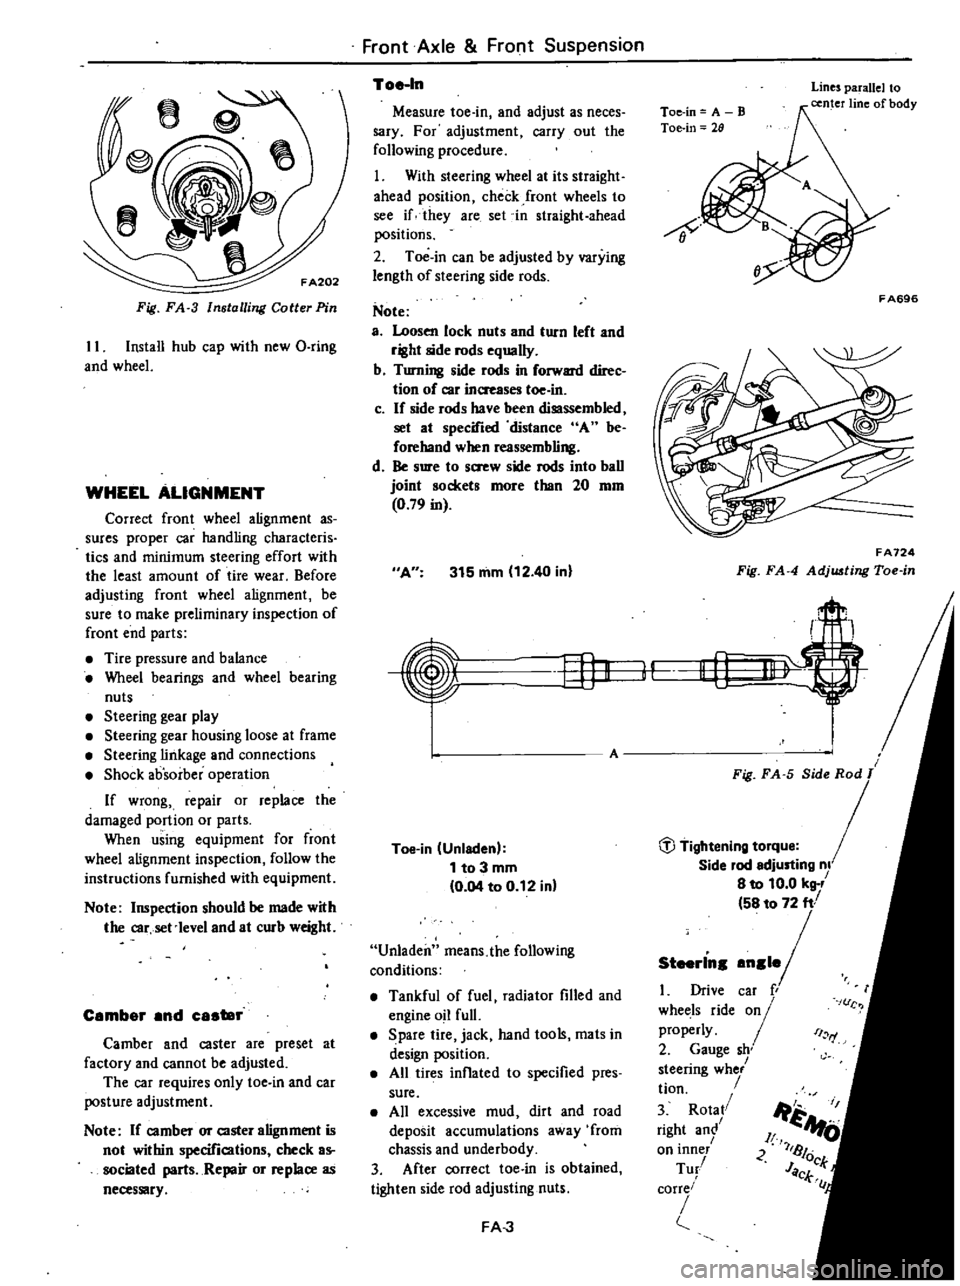 DATSUN 210 1979  Service Manual 
Fig 
FA 
3

Installing 
Coller 
Pin

II 
Install 
hub

cap 
with 
new 
Q

ring

and 
wheel

WHEEL 
ALIGNMENT

Correct 
front 
wheel

alignment 
as

sures

proper 
car

handling 
characteris

tics

an